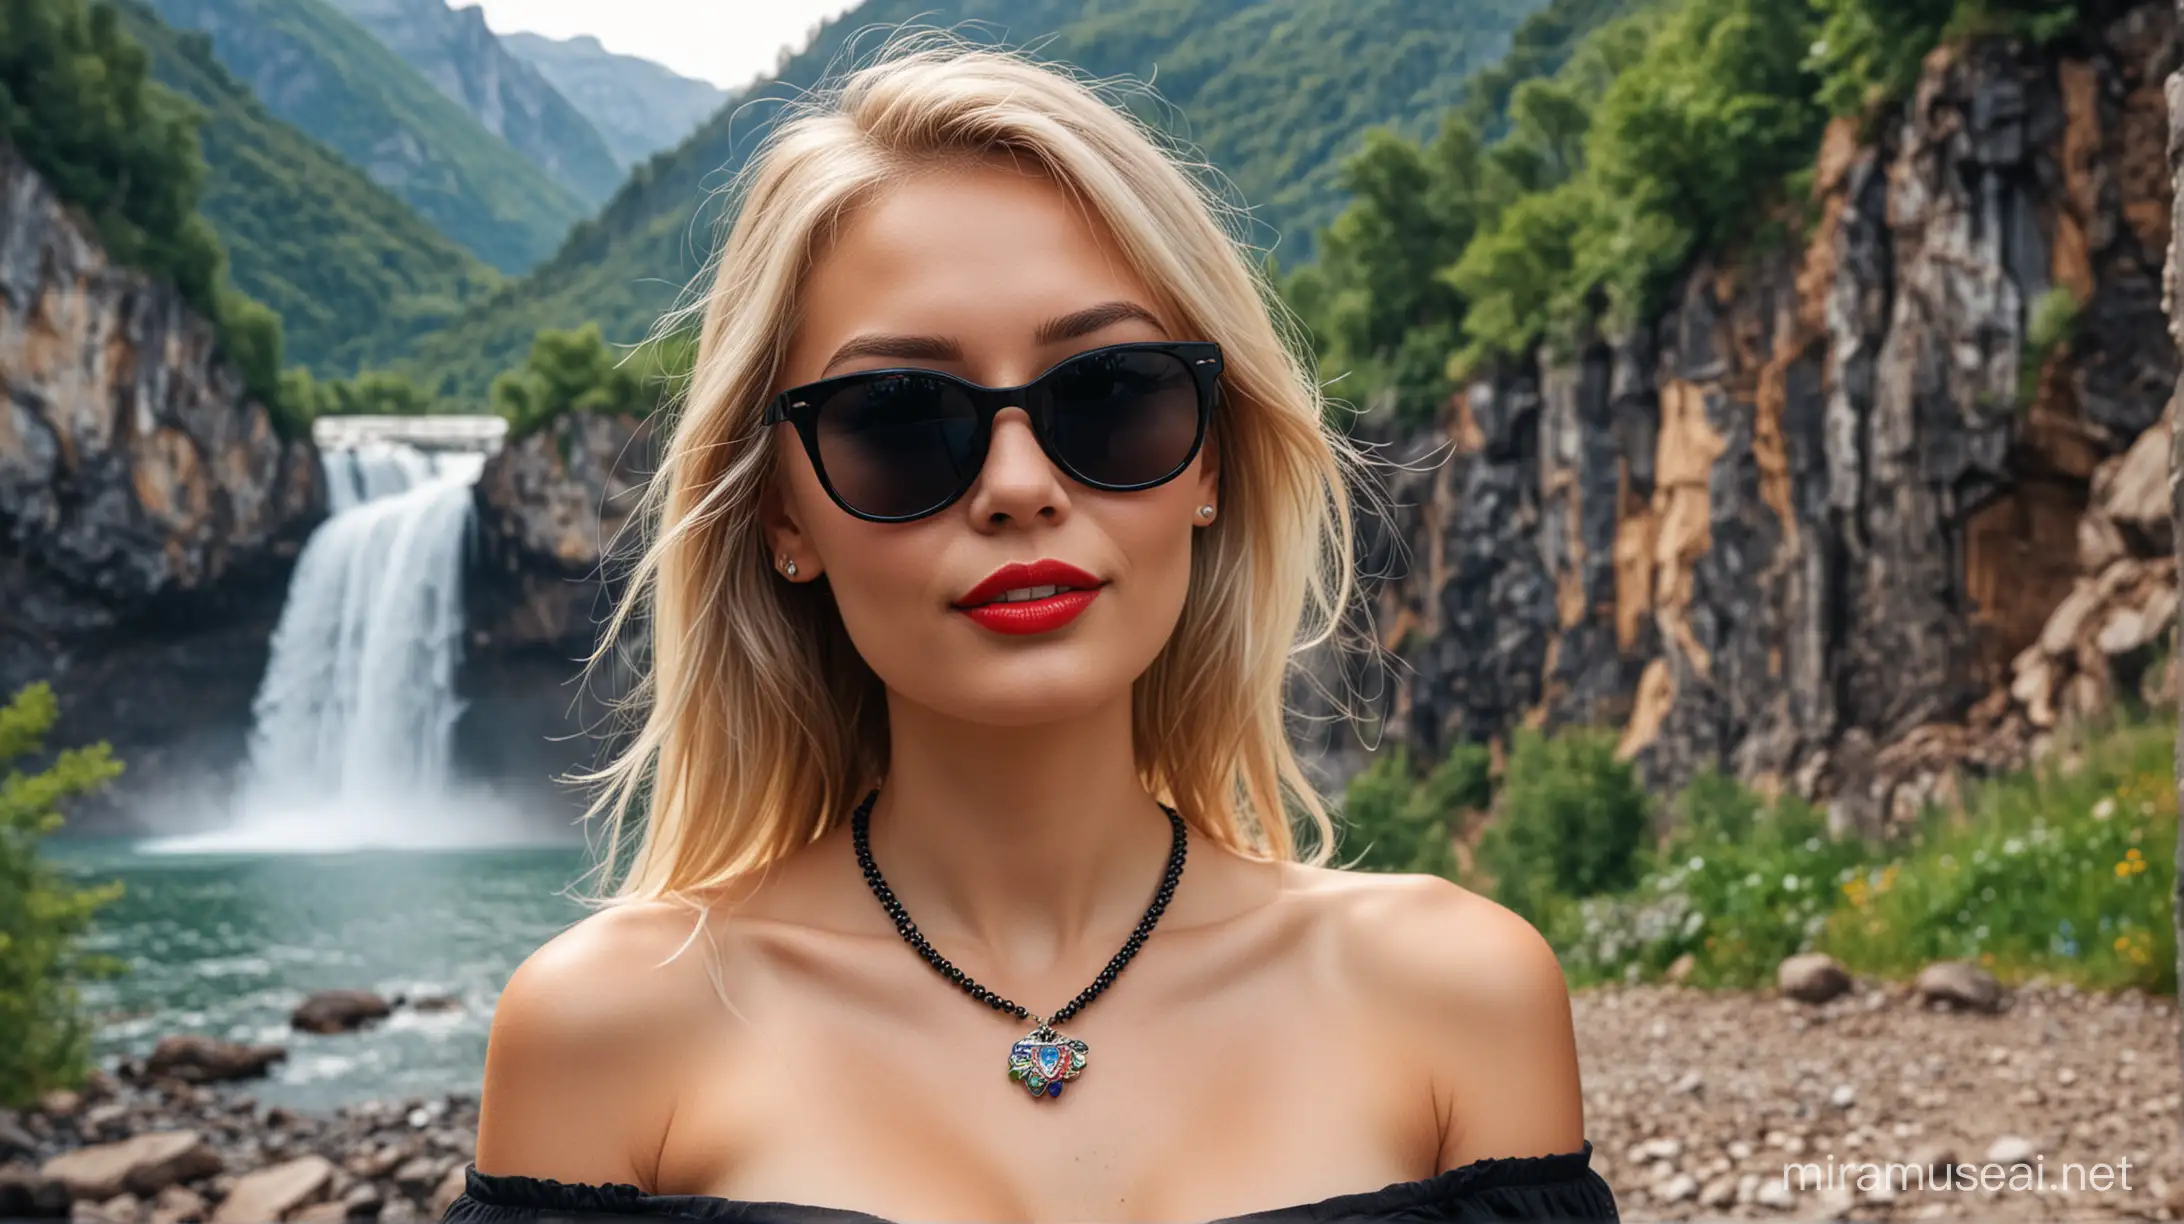 Scenic Portrait of a Blonde Russian Woman Amidst Mountain Splendor